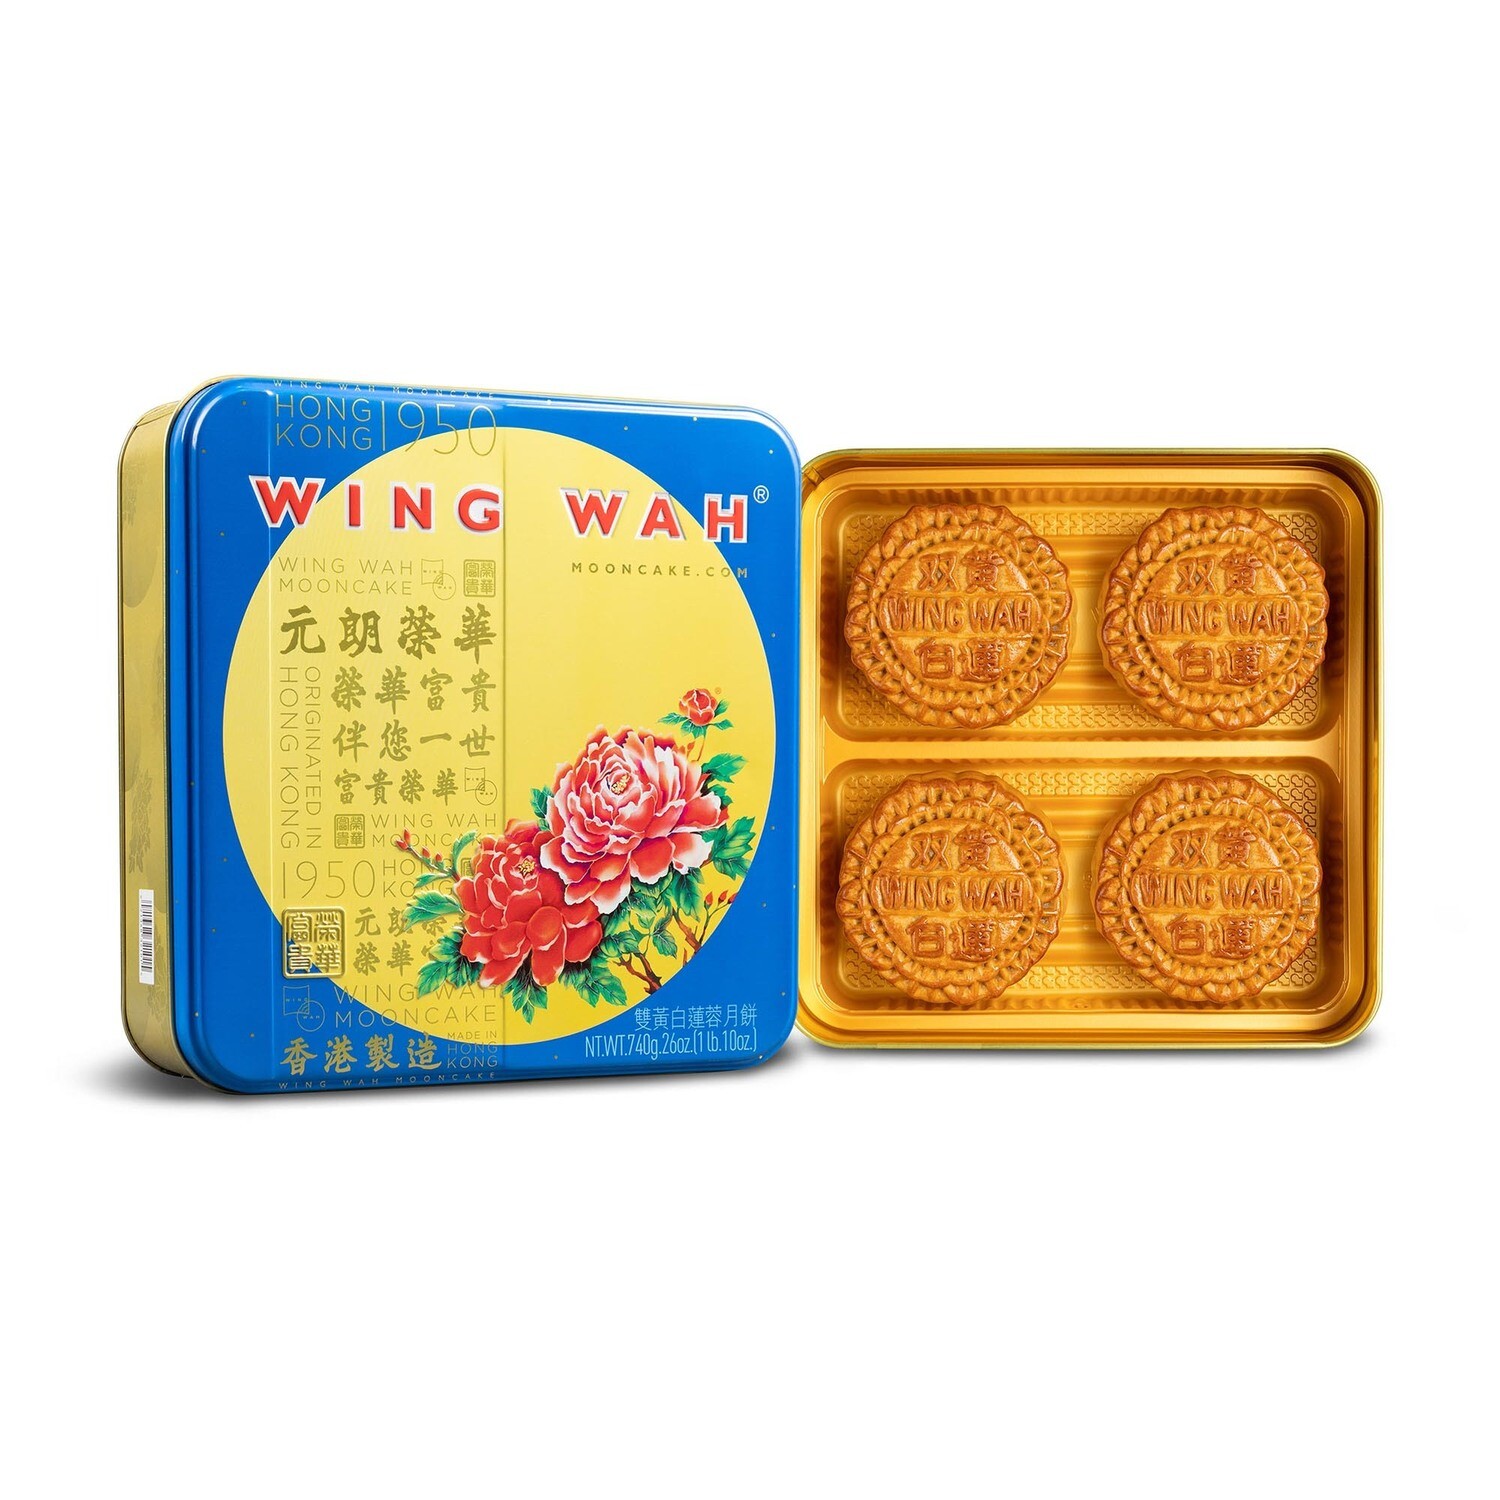 Wing Wah Moon Cake 香港名牌荣华双黄白莲蓉月饼  四个装 2盒以上$49.99/盒